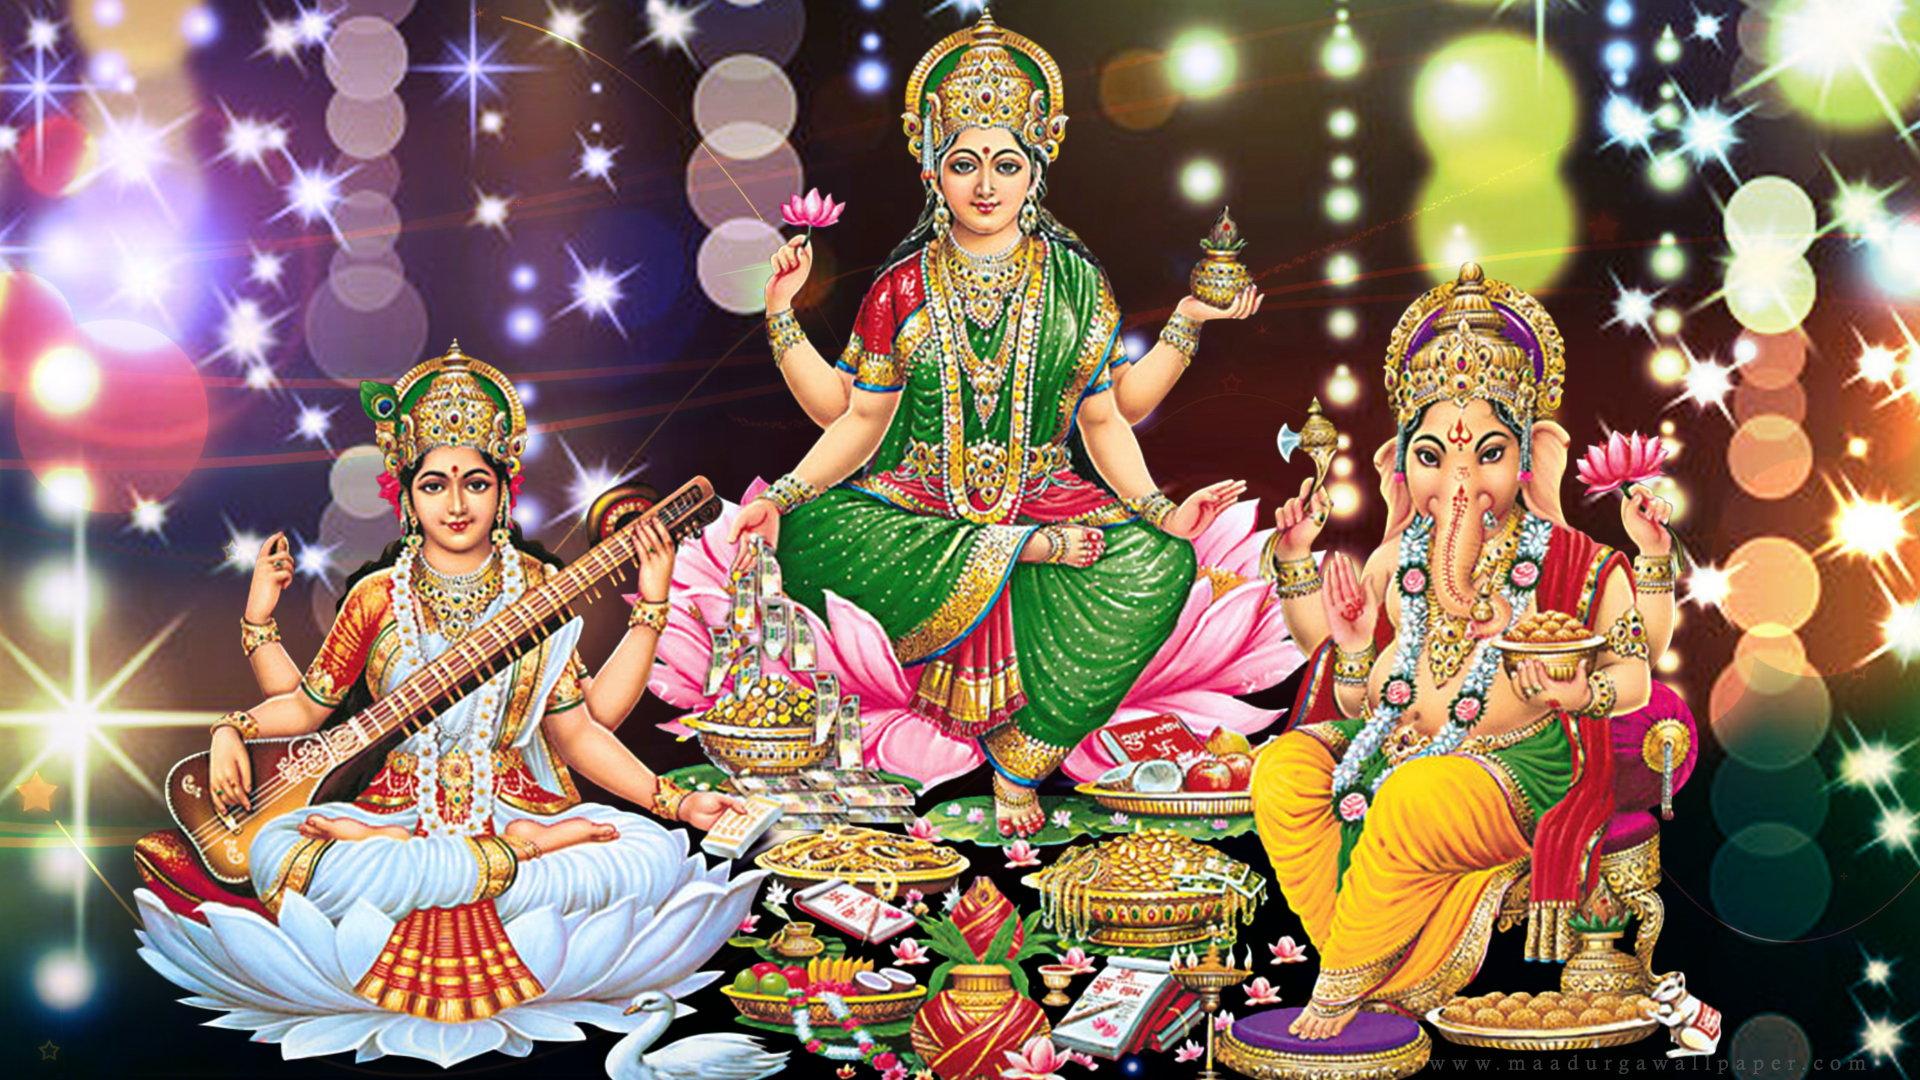 Goddess Lakshmi Image & HD wallpaper download